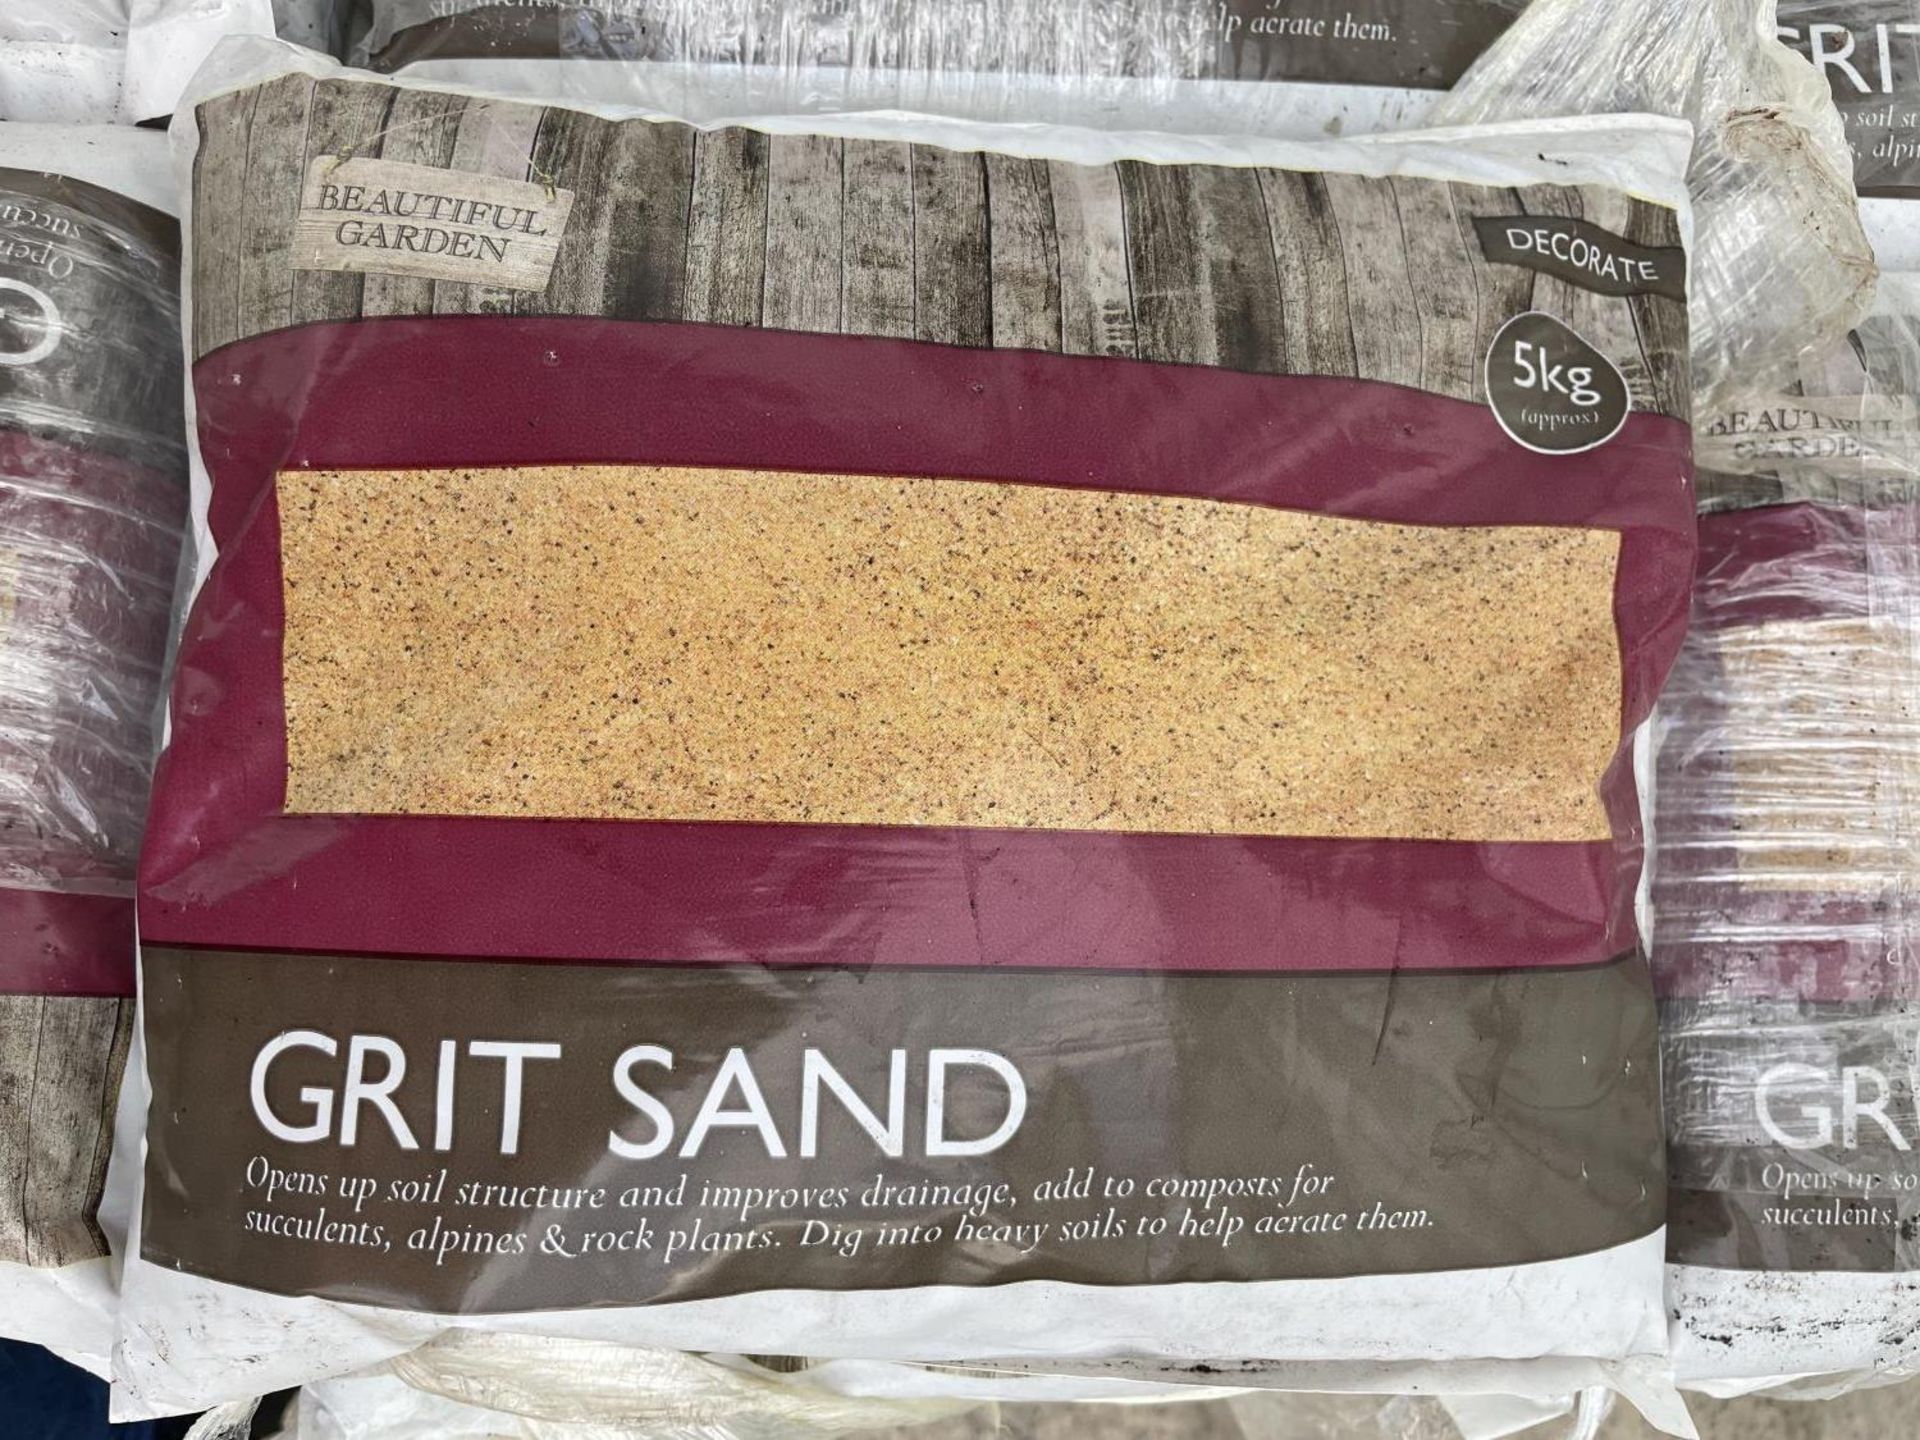 TWENTY FOUR 5KG BAGS OF GRIT SAND NO VAT